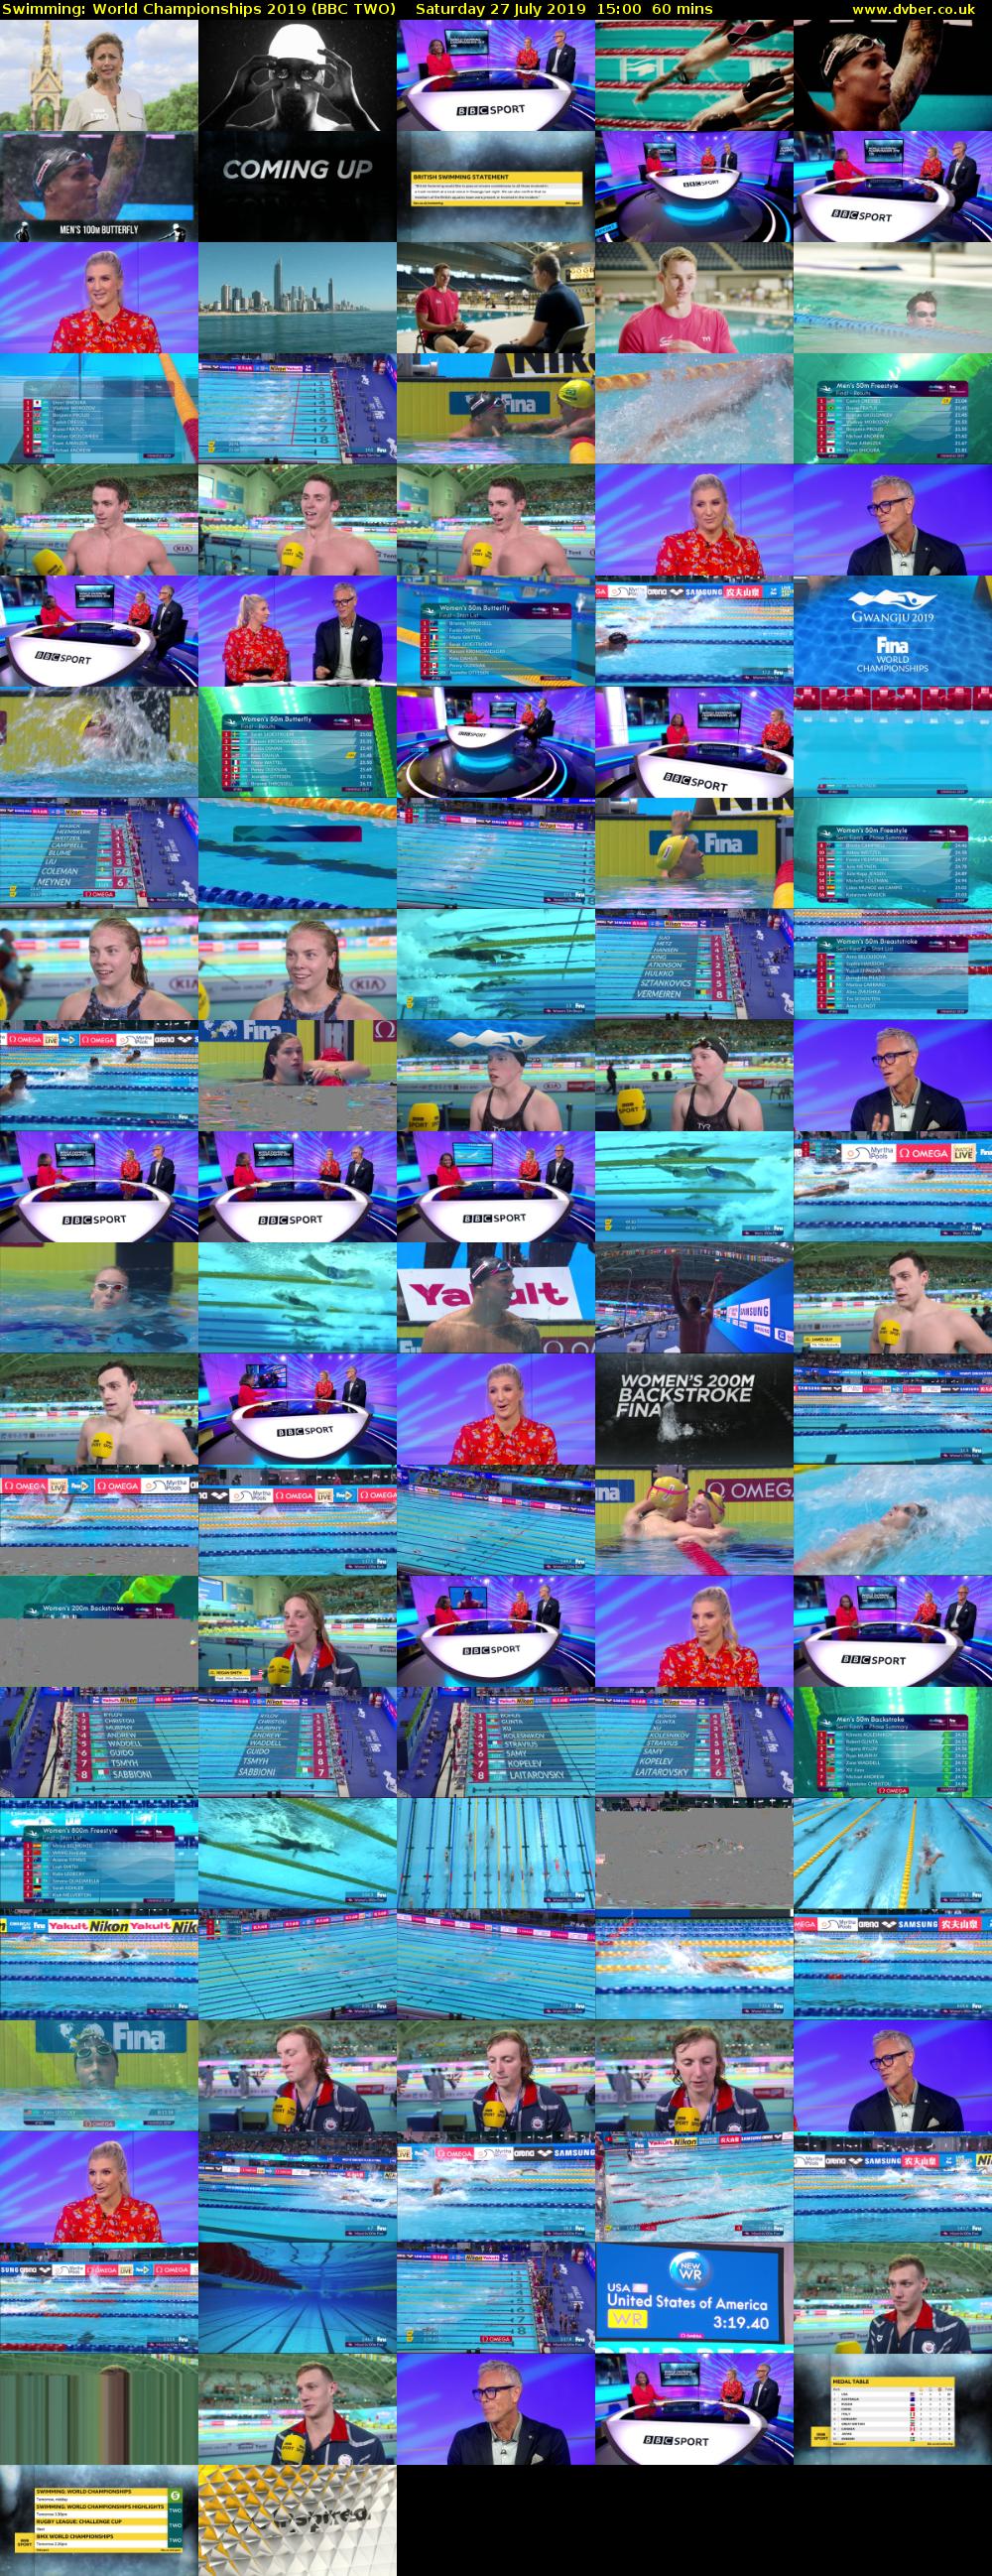 Swimming: World Championships 2019 (BBC TWO) Saturday 27 July 2019 15:00 - 16:00